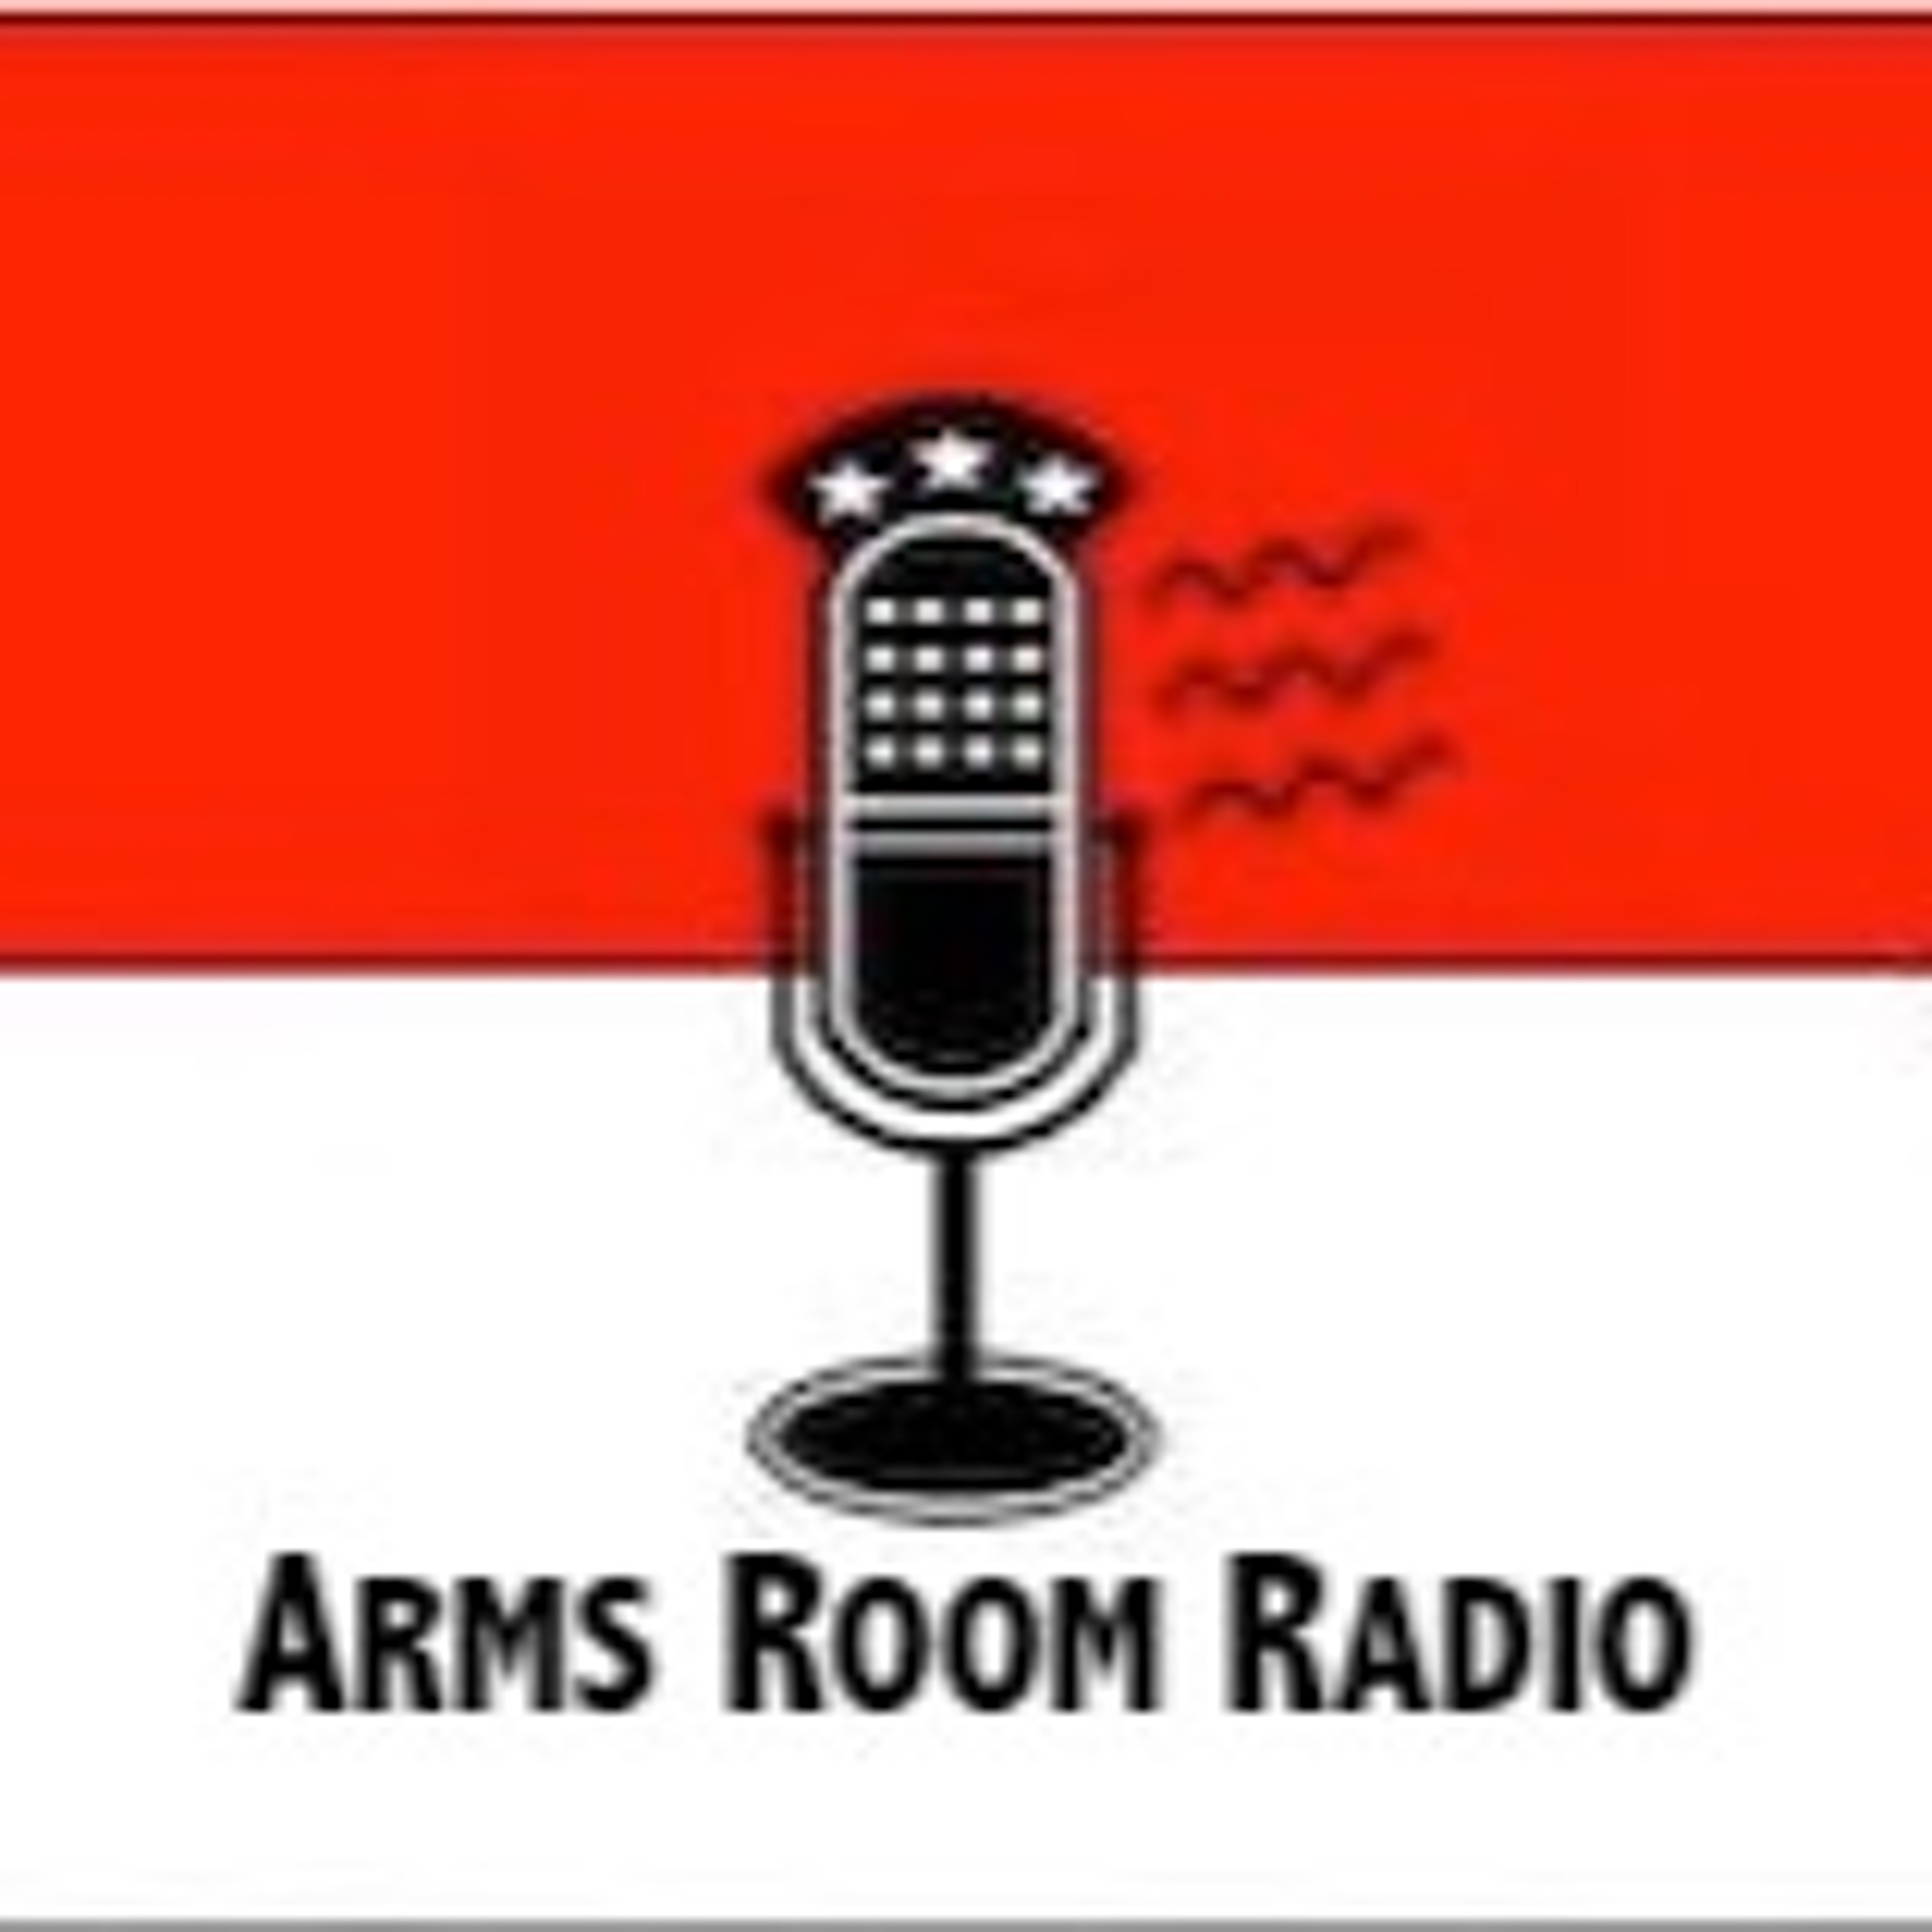 ArmsRoomRadio 10.19.19 Major Bill guest hosts